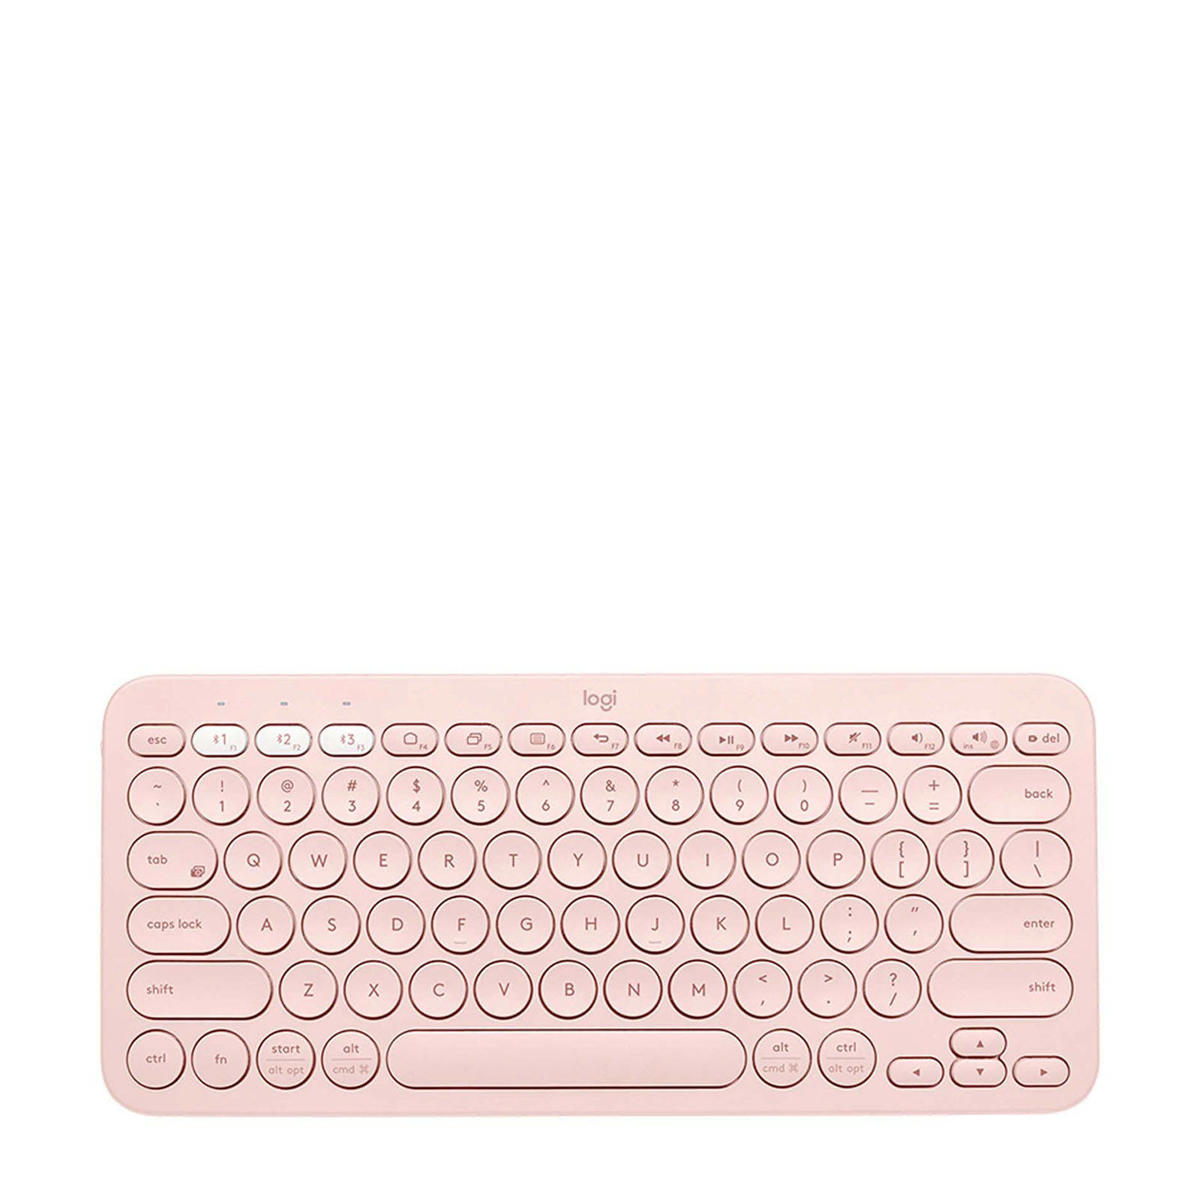 Uluru vacht adelaar Logitech K380 US international Bluetooth toetsenbord (roze) | wehkamp